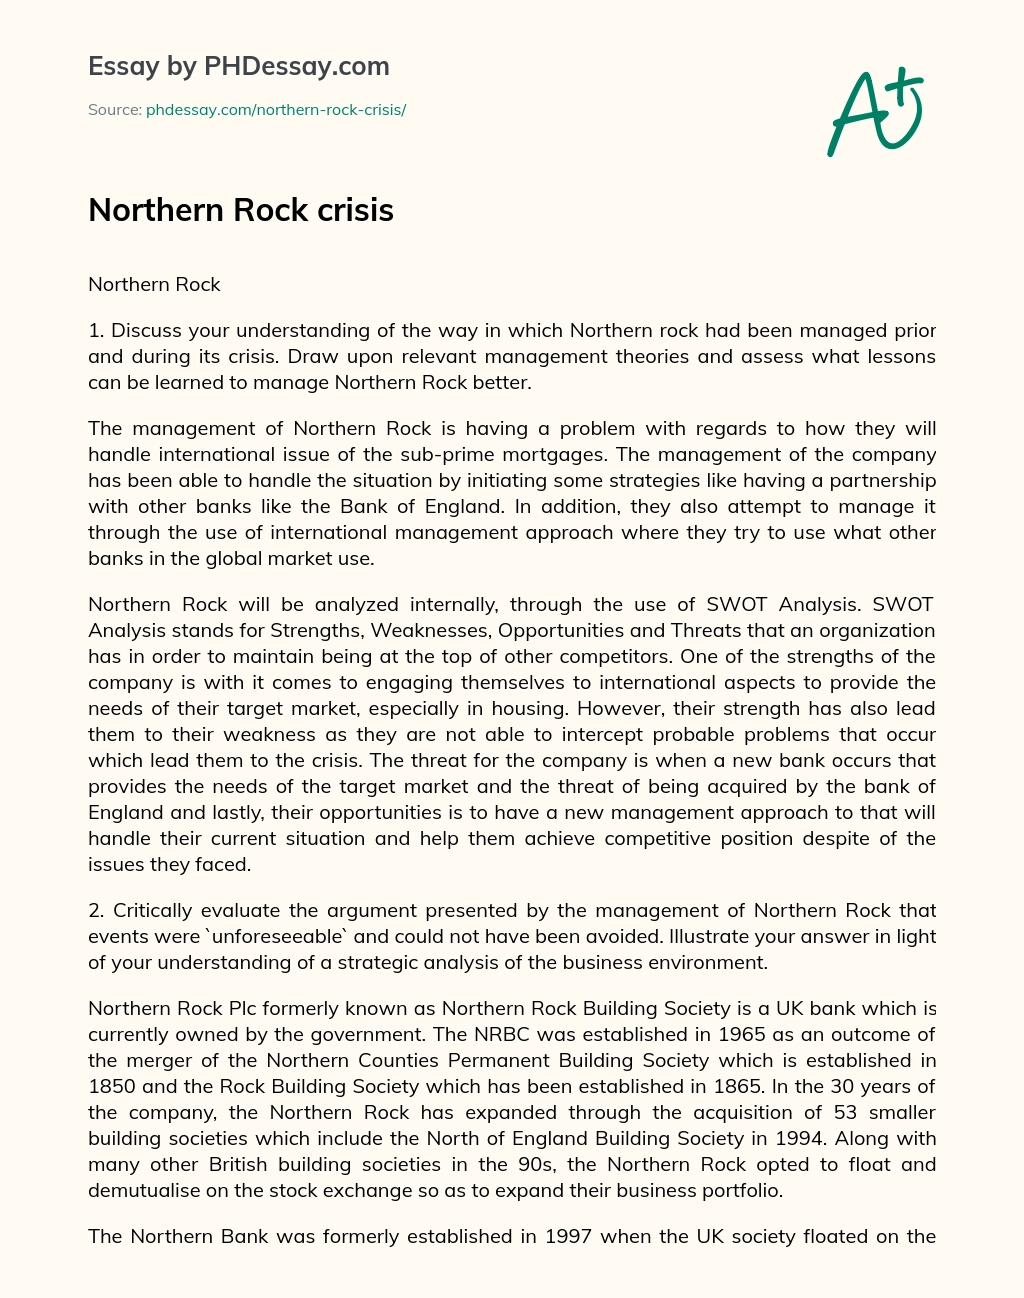 Northern Rock crisis essay